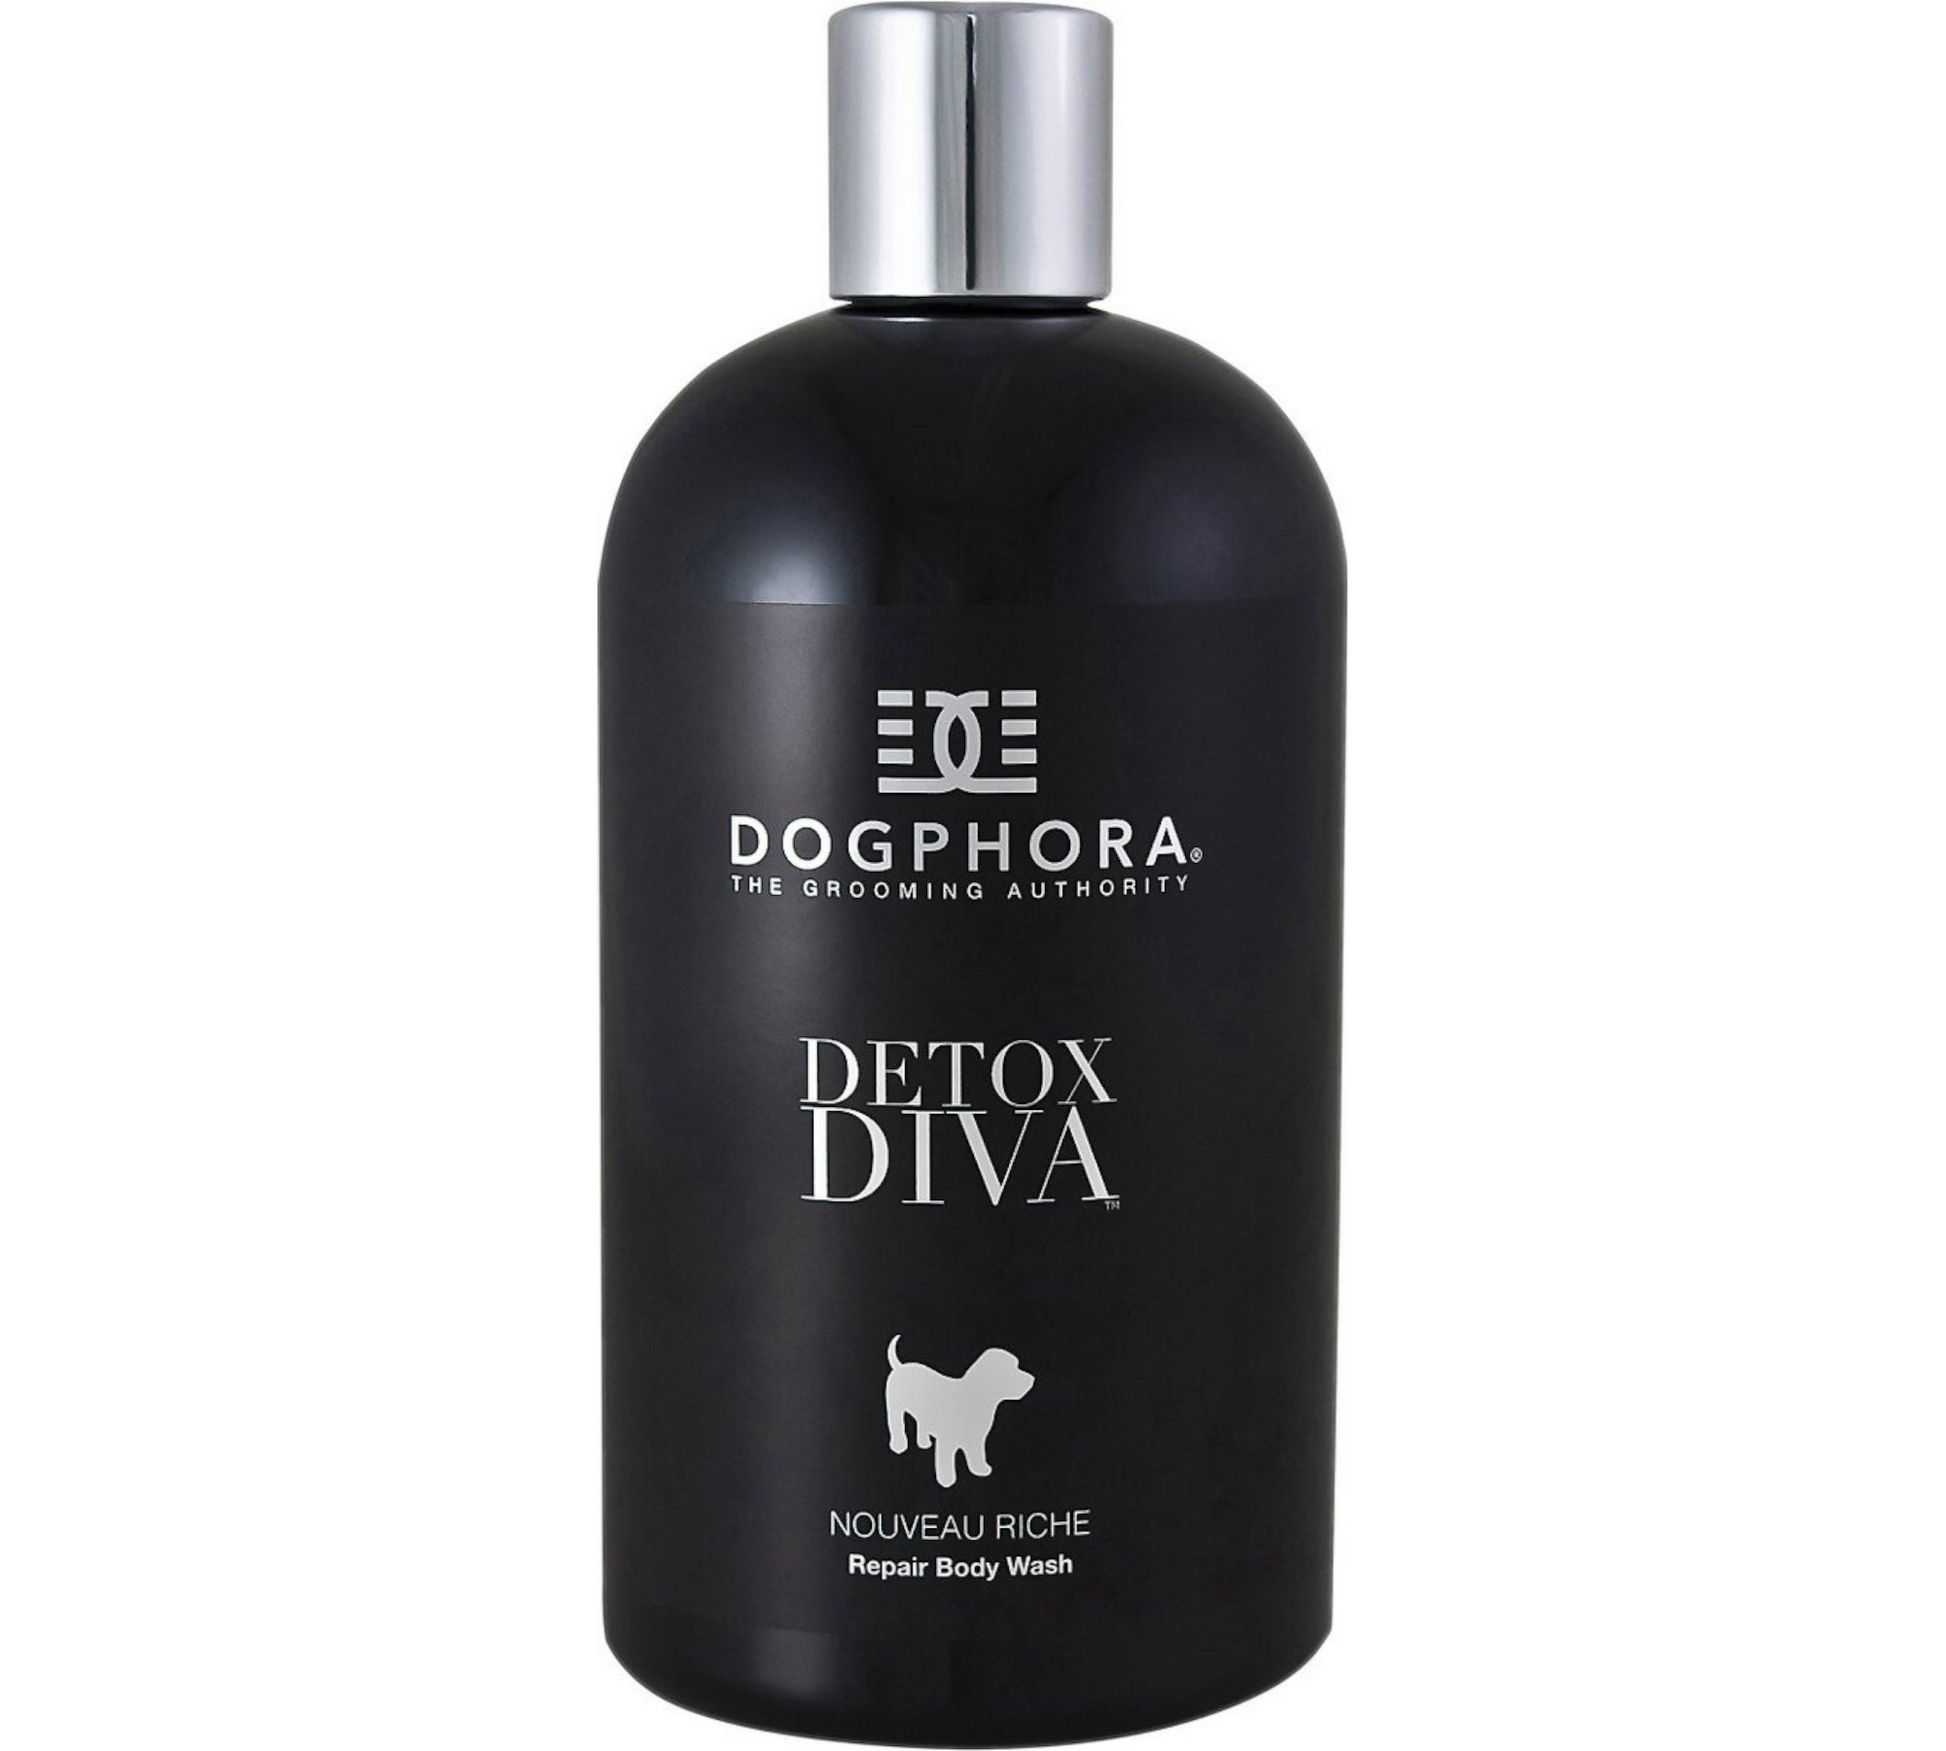 Canine's World Dog Shampoos Dogphora Detox Diva Repair Dog Body Wash, Dogphora